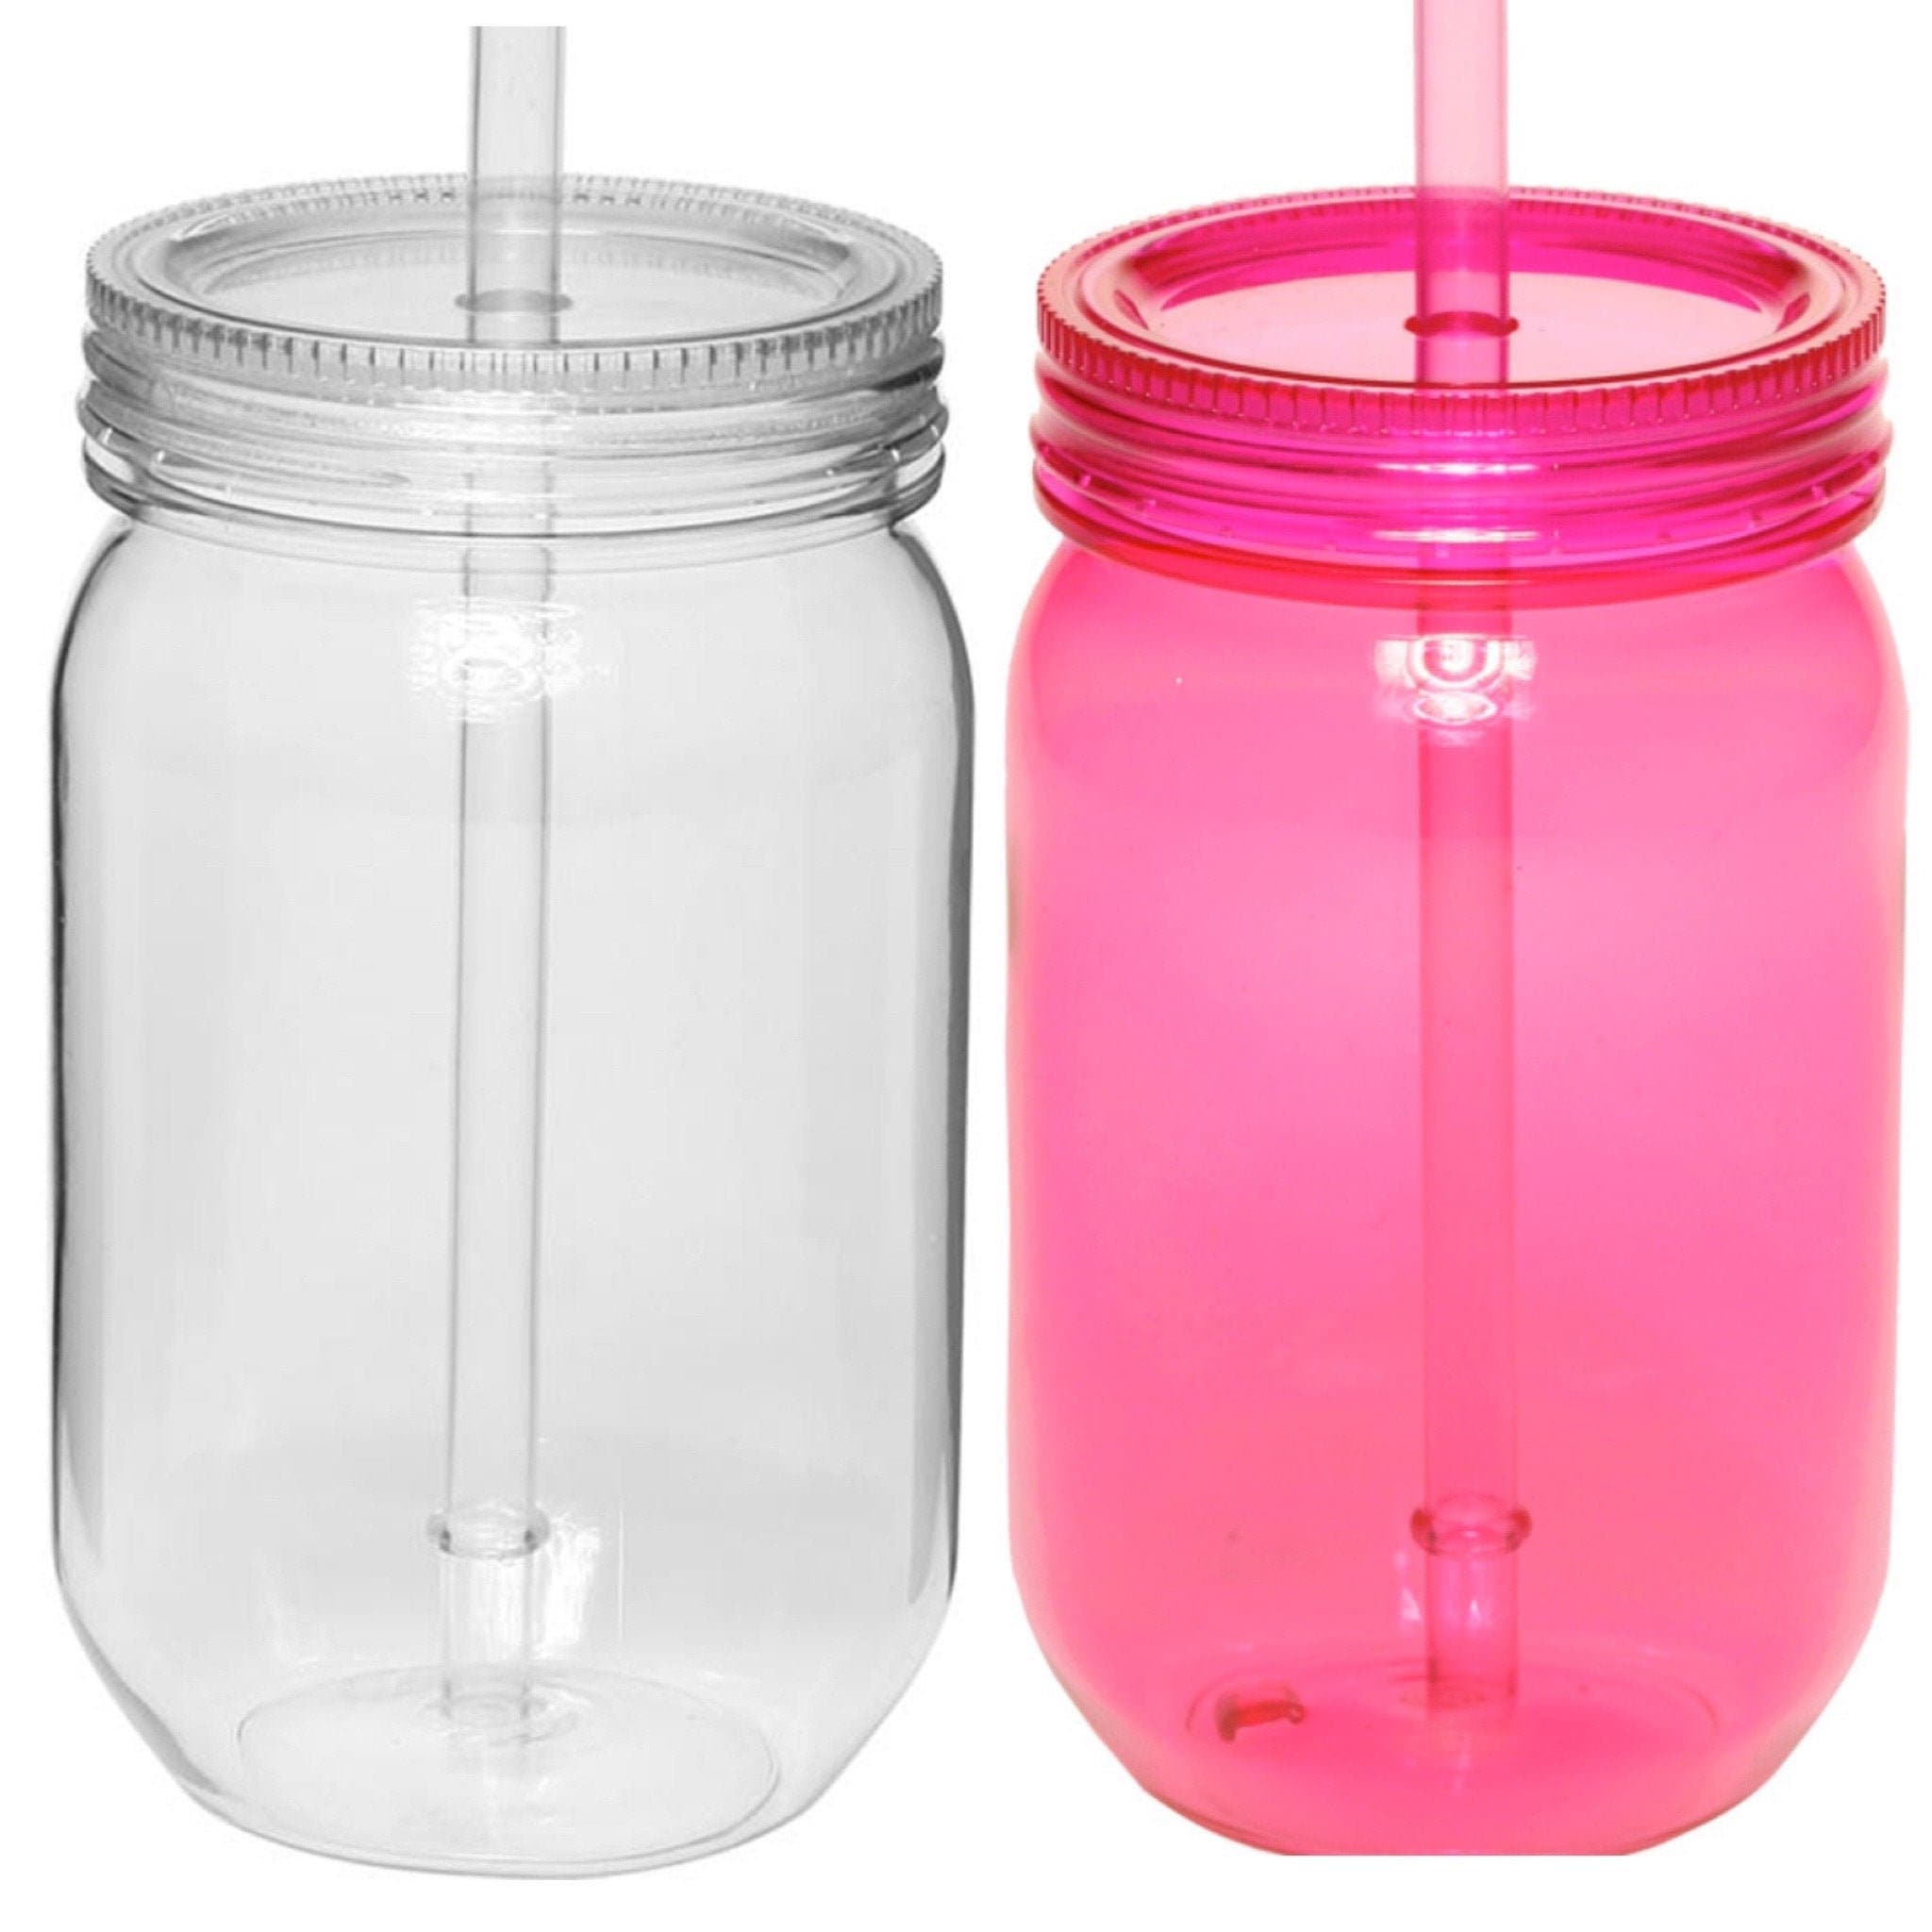 Plastic Jar. Jar cup